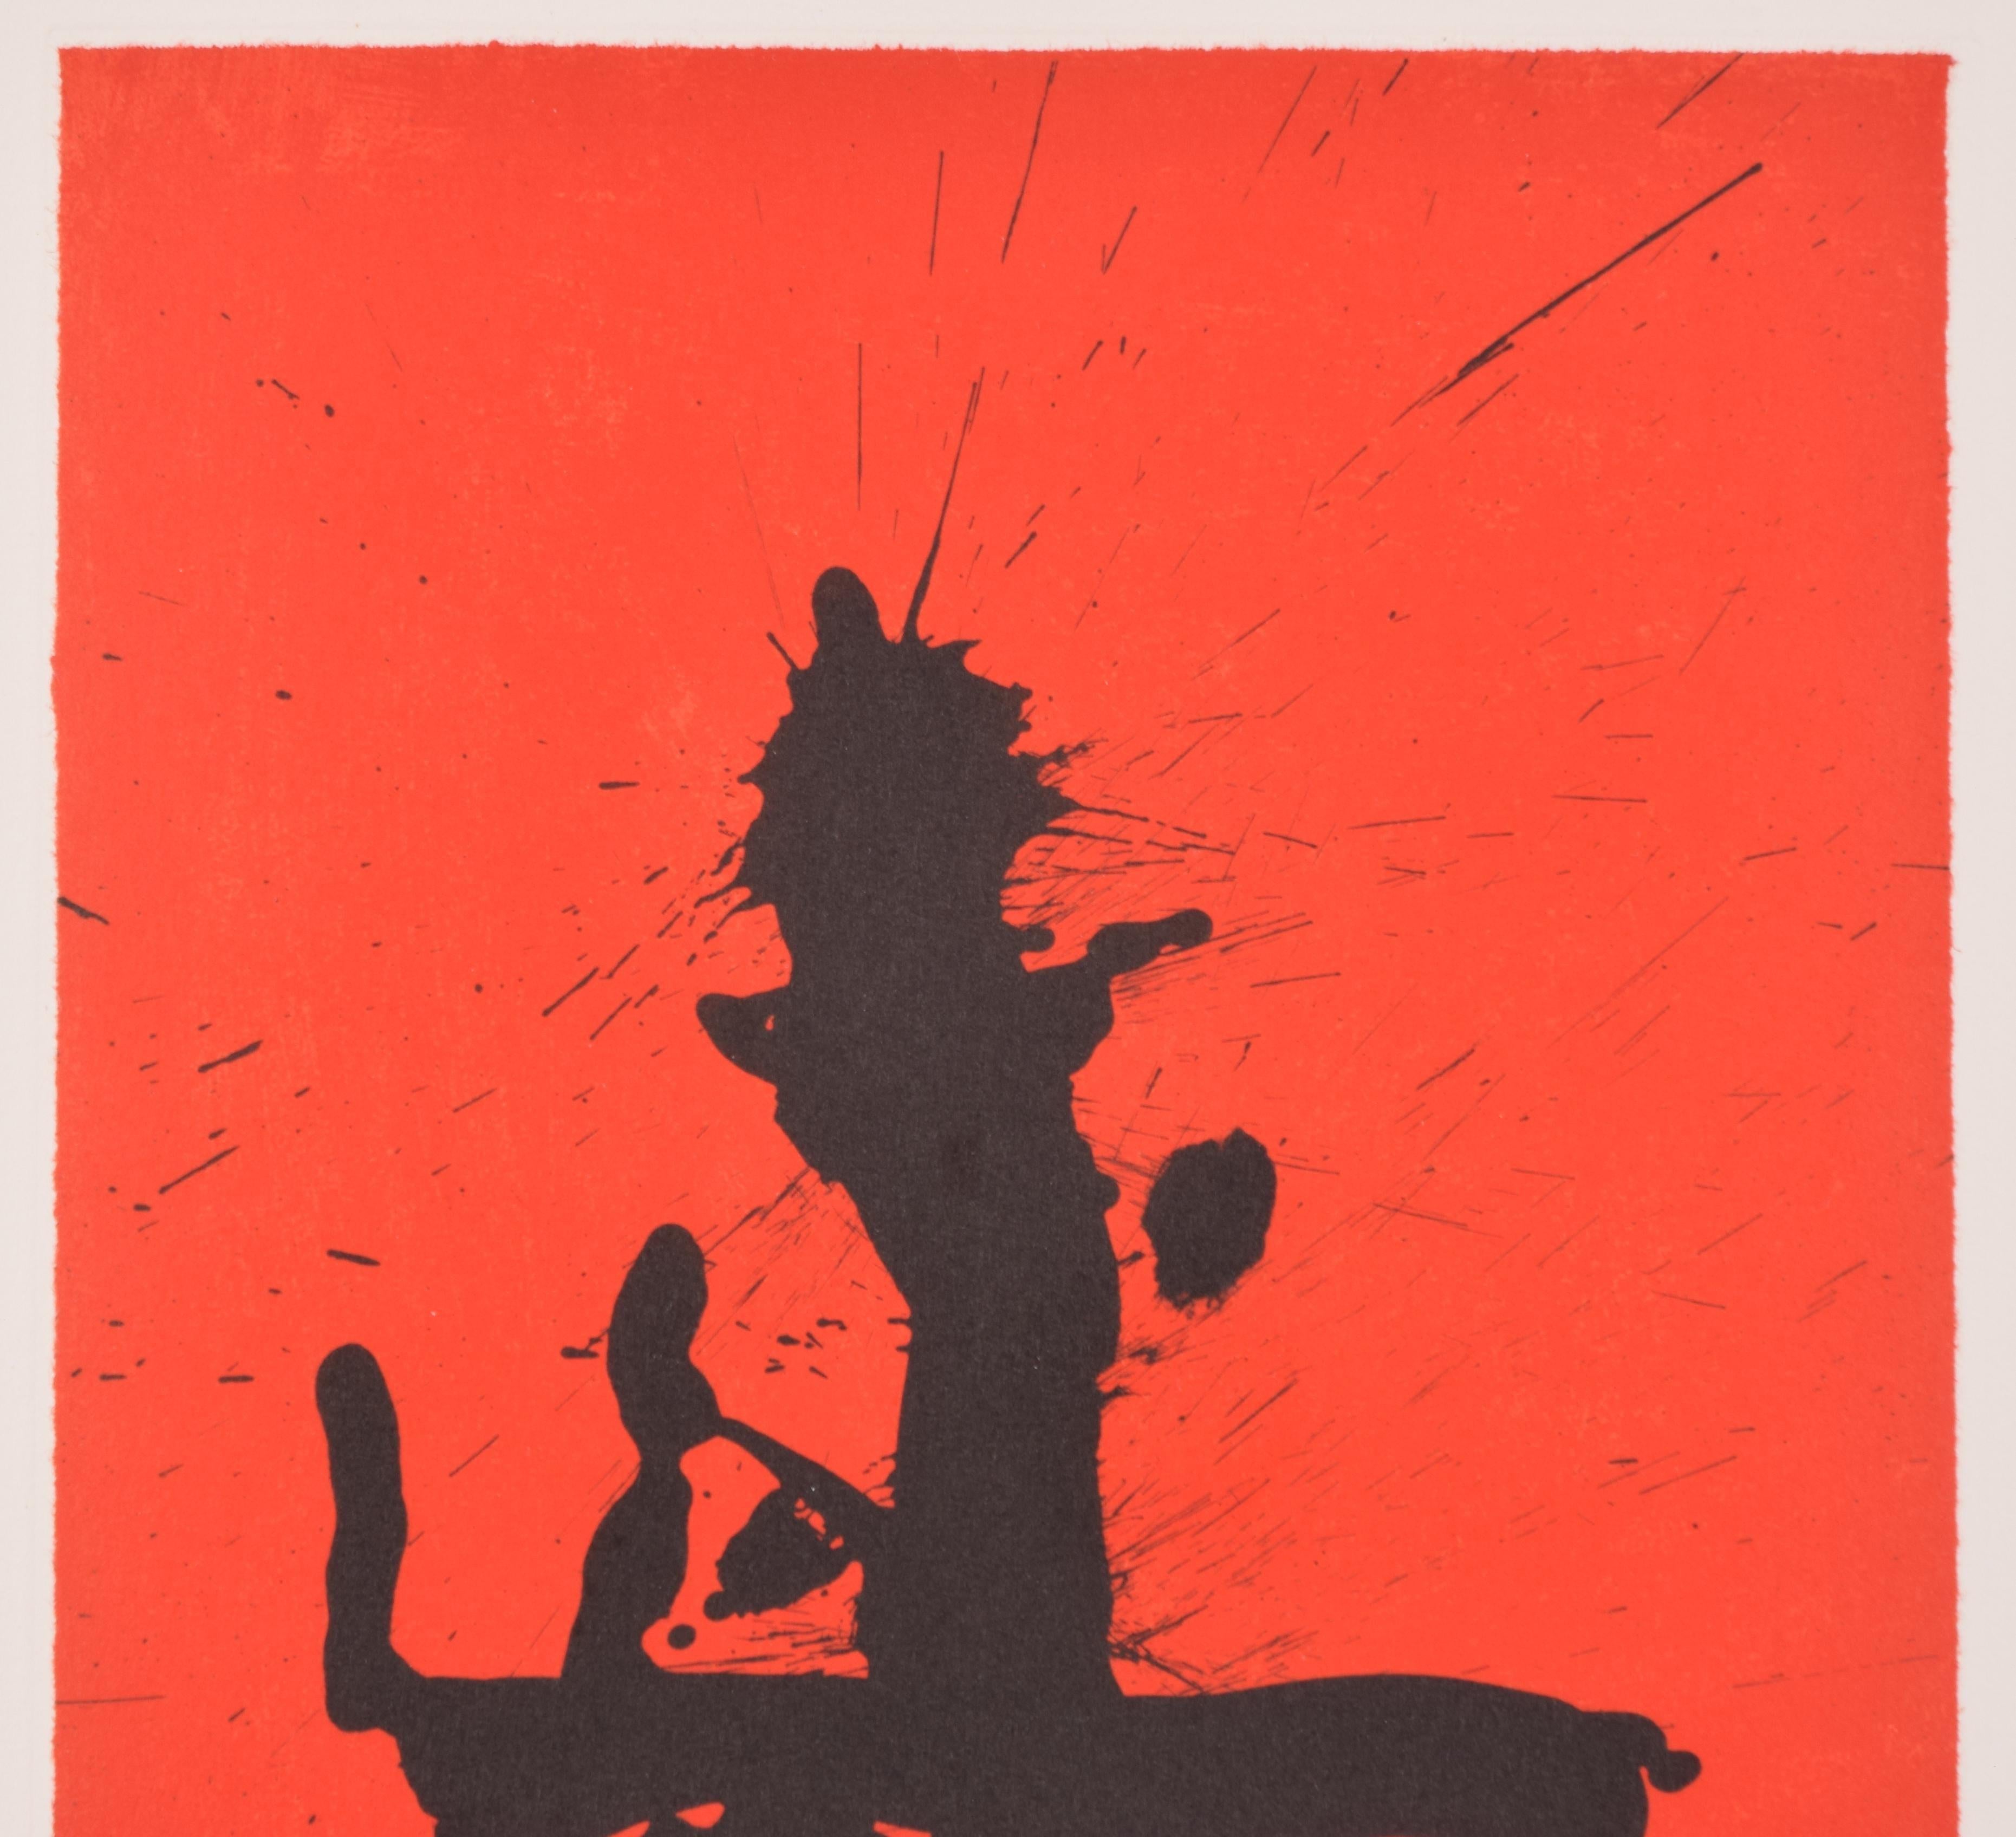 Samurai rouges de la suite Octavio Paz  - Print de Robert Motherwell